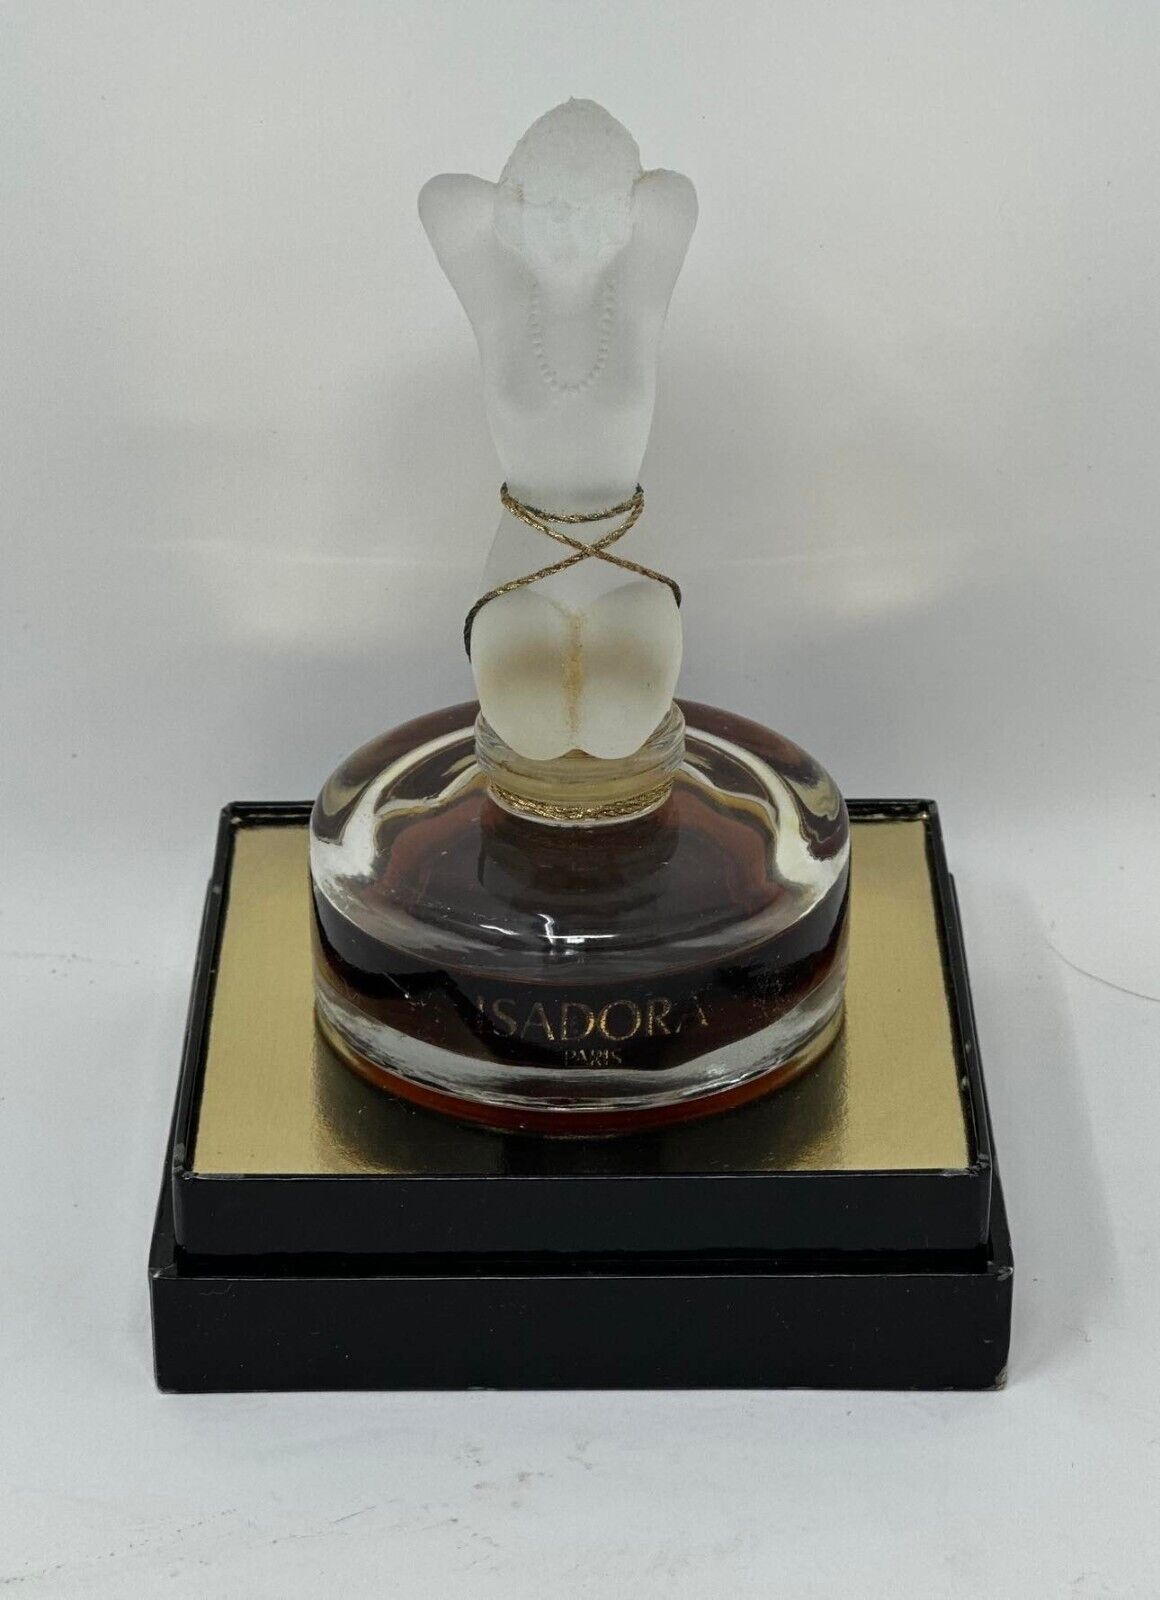 Perfume for Women-Isadora Vintage-Rare-1 oz. Crystal bottle-never opened